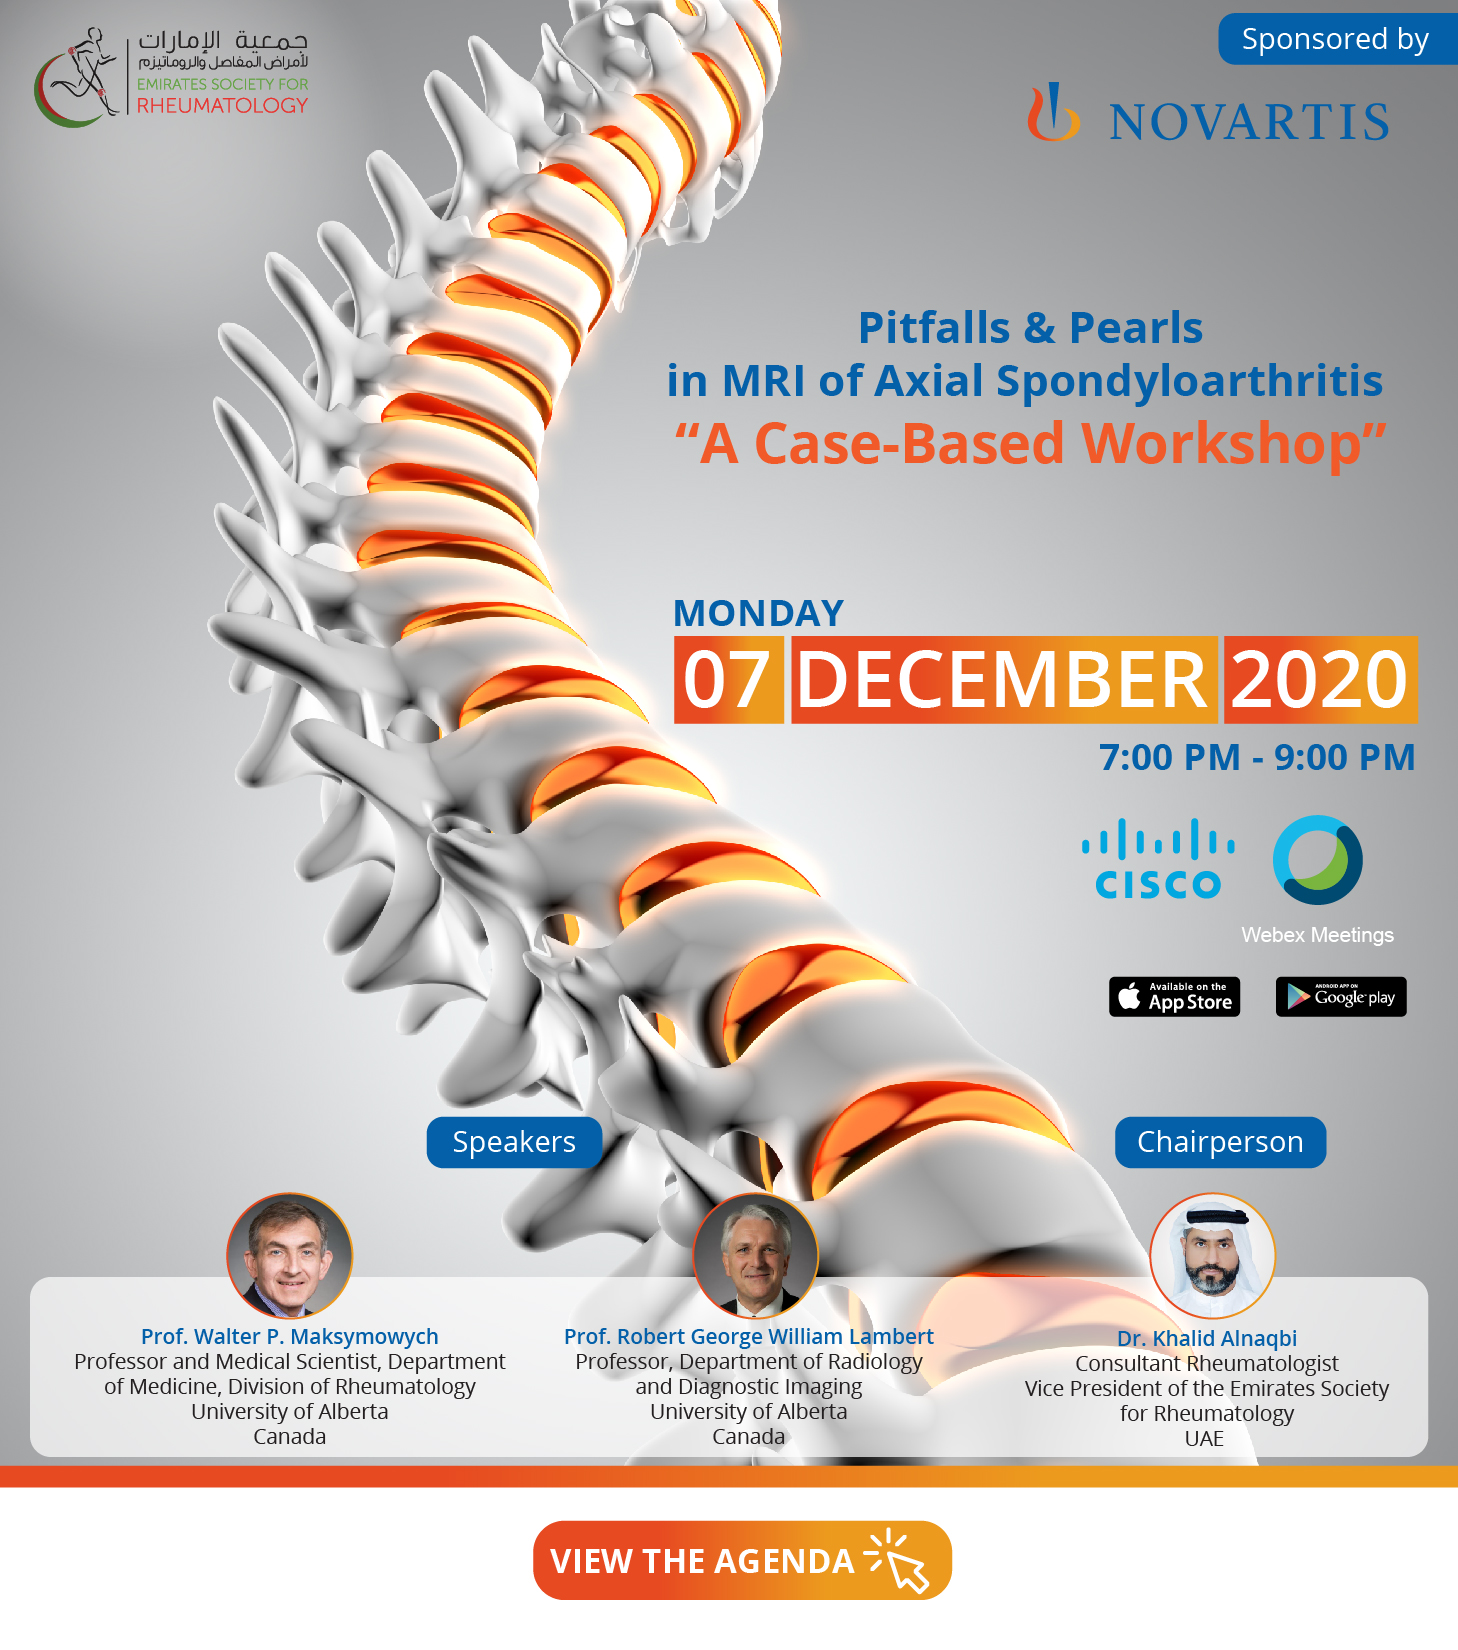 Pitfalls & Pearls in MRI of Axial Spondyloarthritis “A Case-Based Workshop”